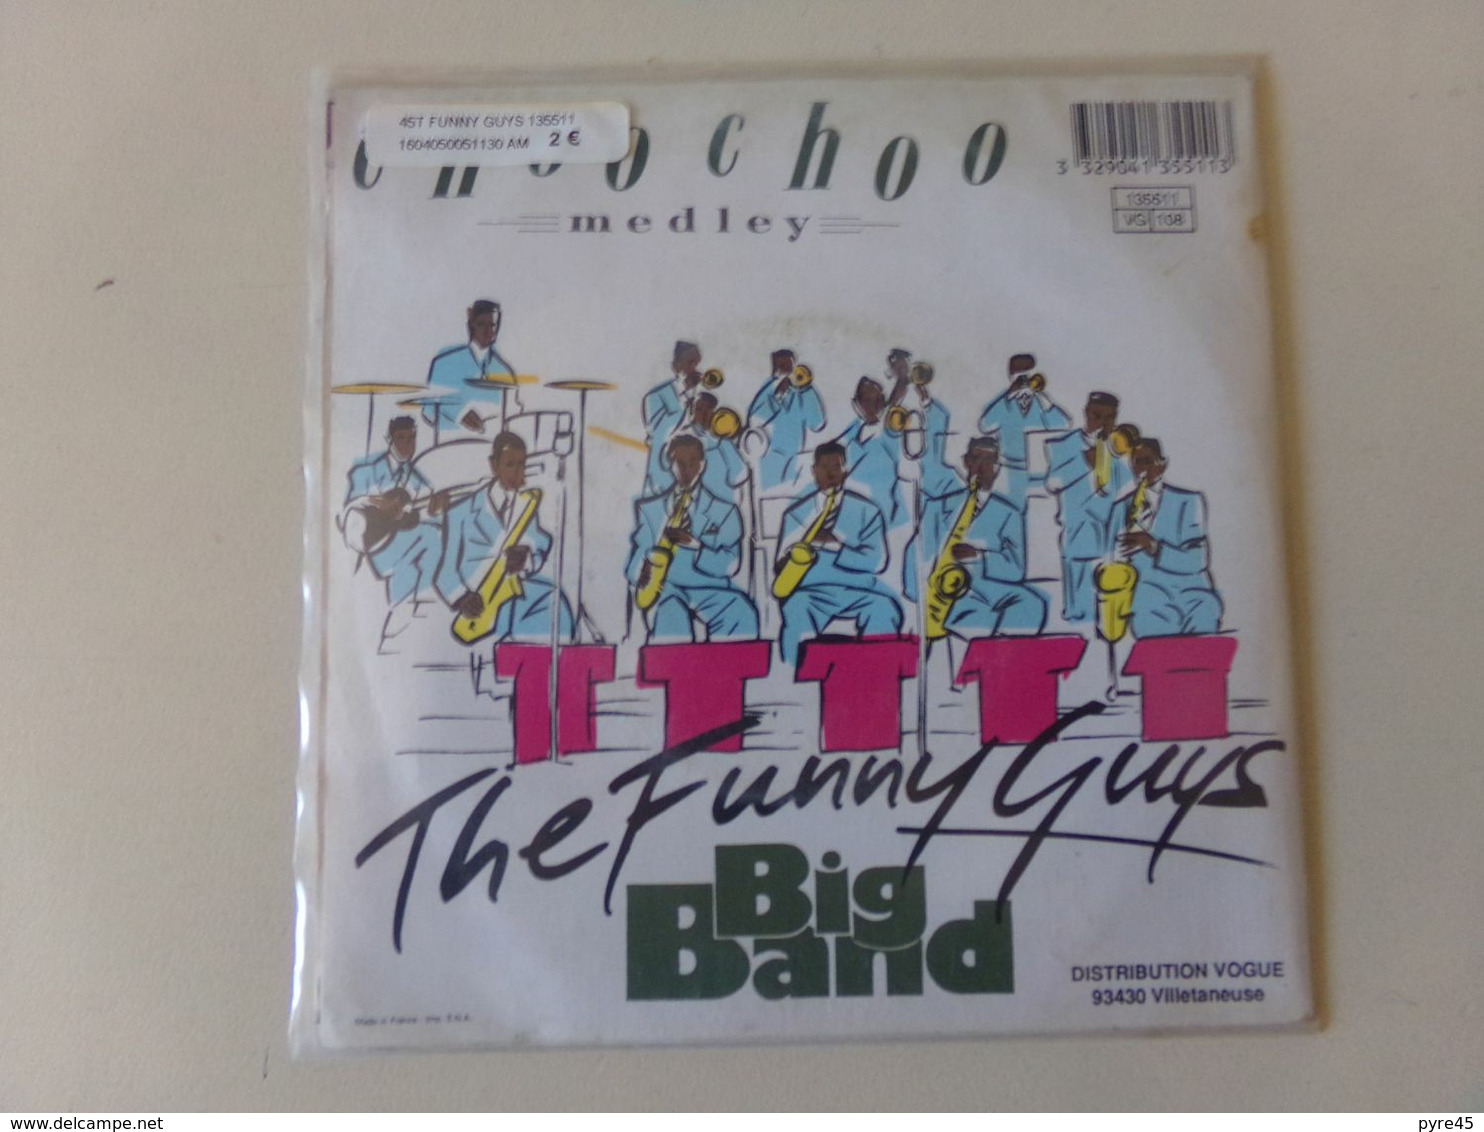 45 T Funny Guys Big Band " Choo Choo Medley " - Jazz